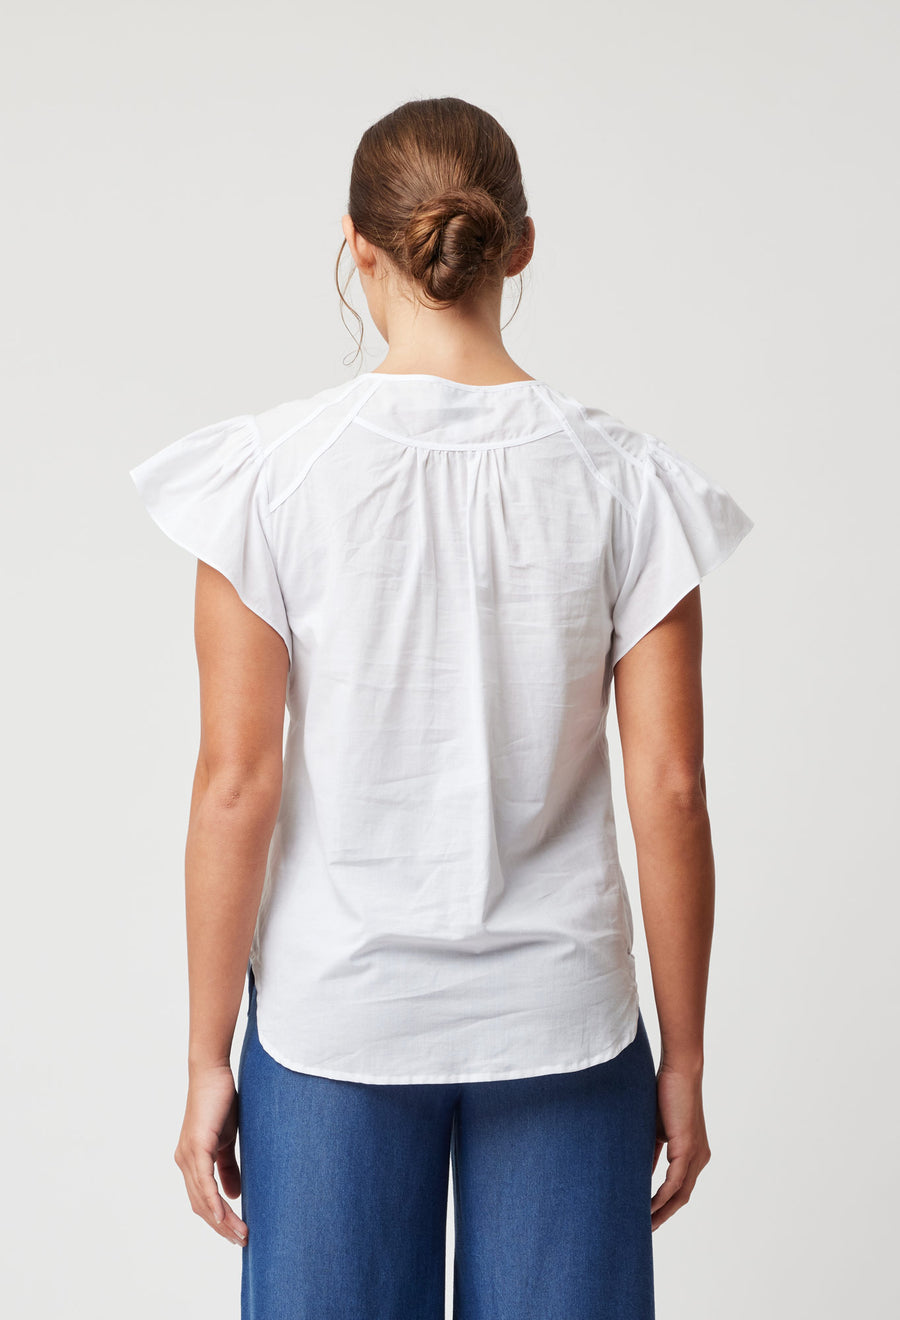 Oncewas II SCALA Embroidered Cotton Shirt/Top